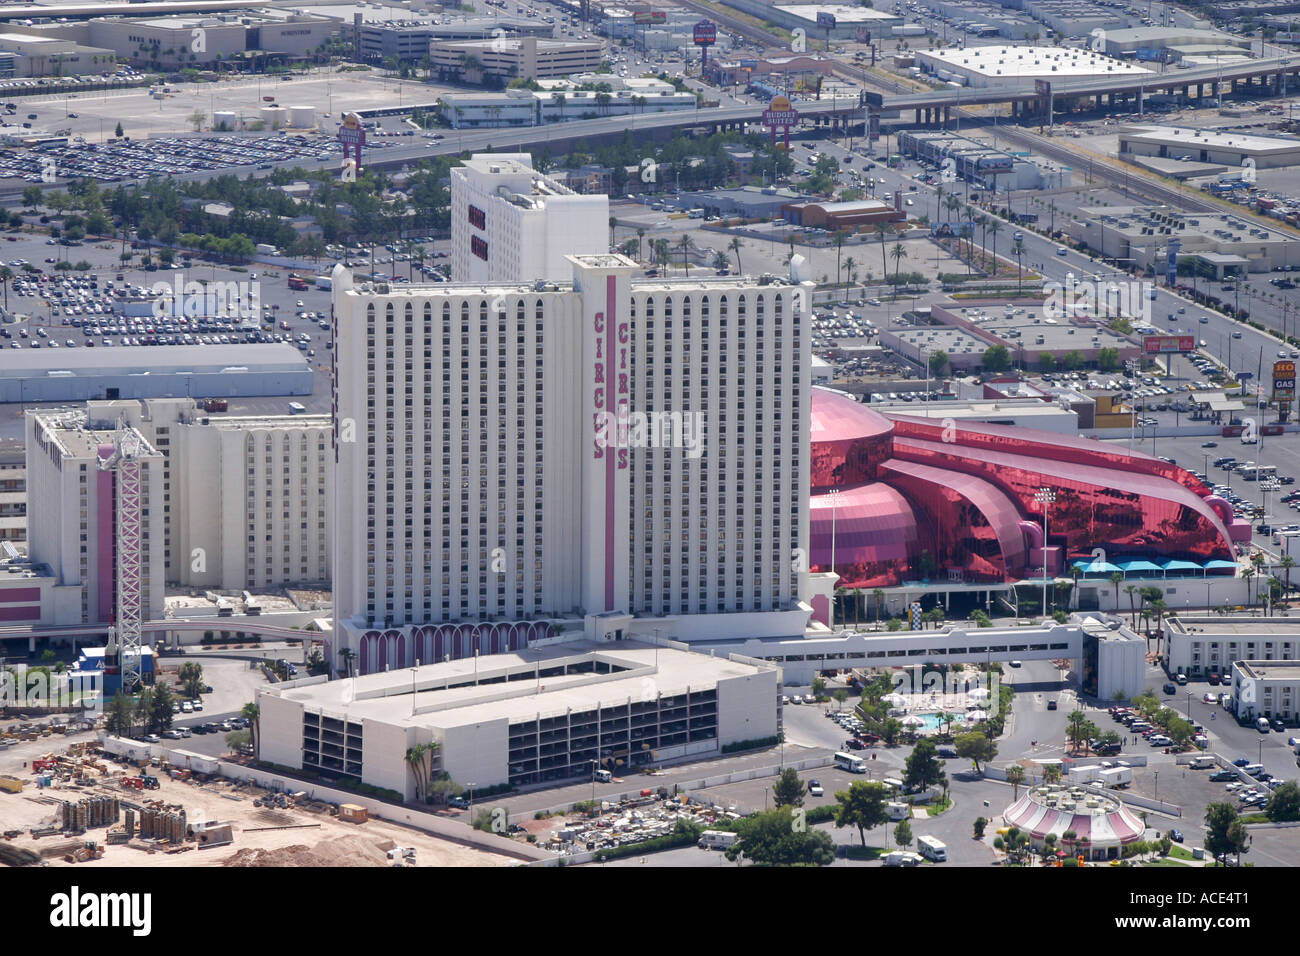 Circus Circus Hotel and Casino Las Vegas Nevada United States of America  Stock Photo - Alamy